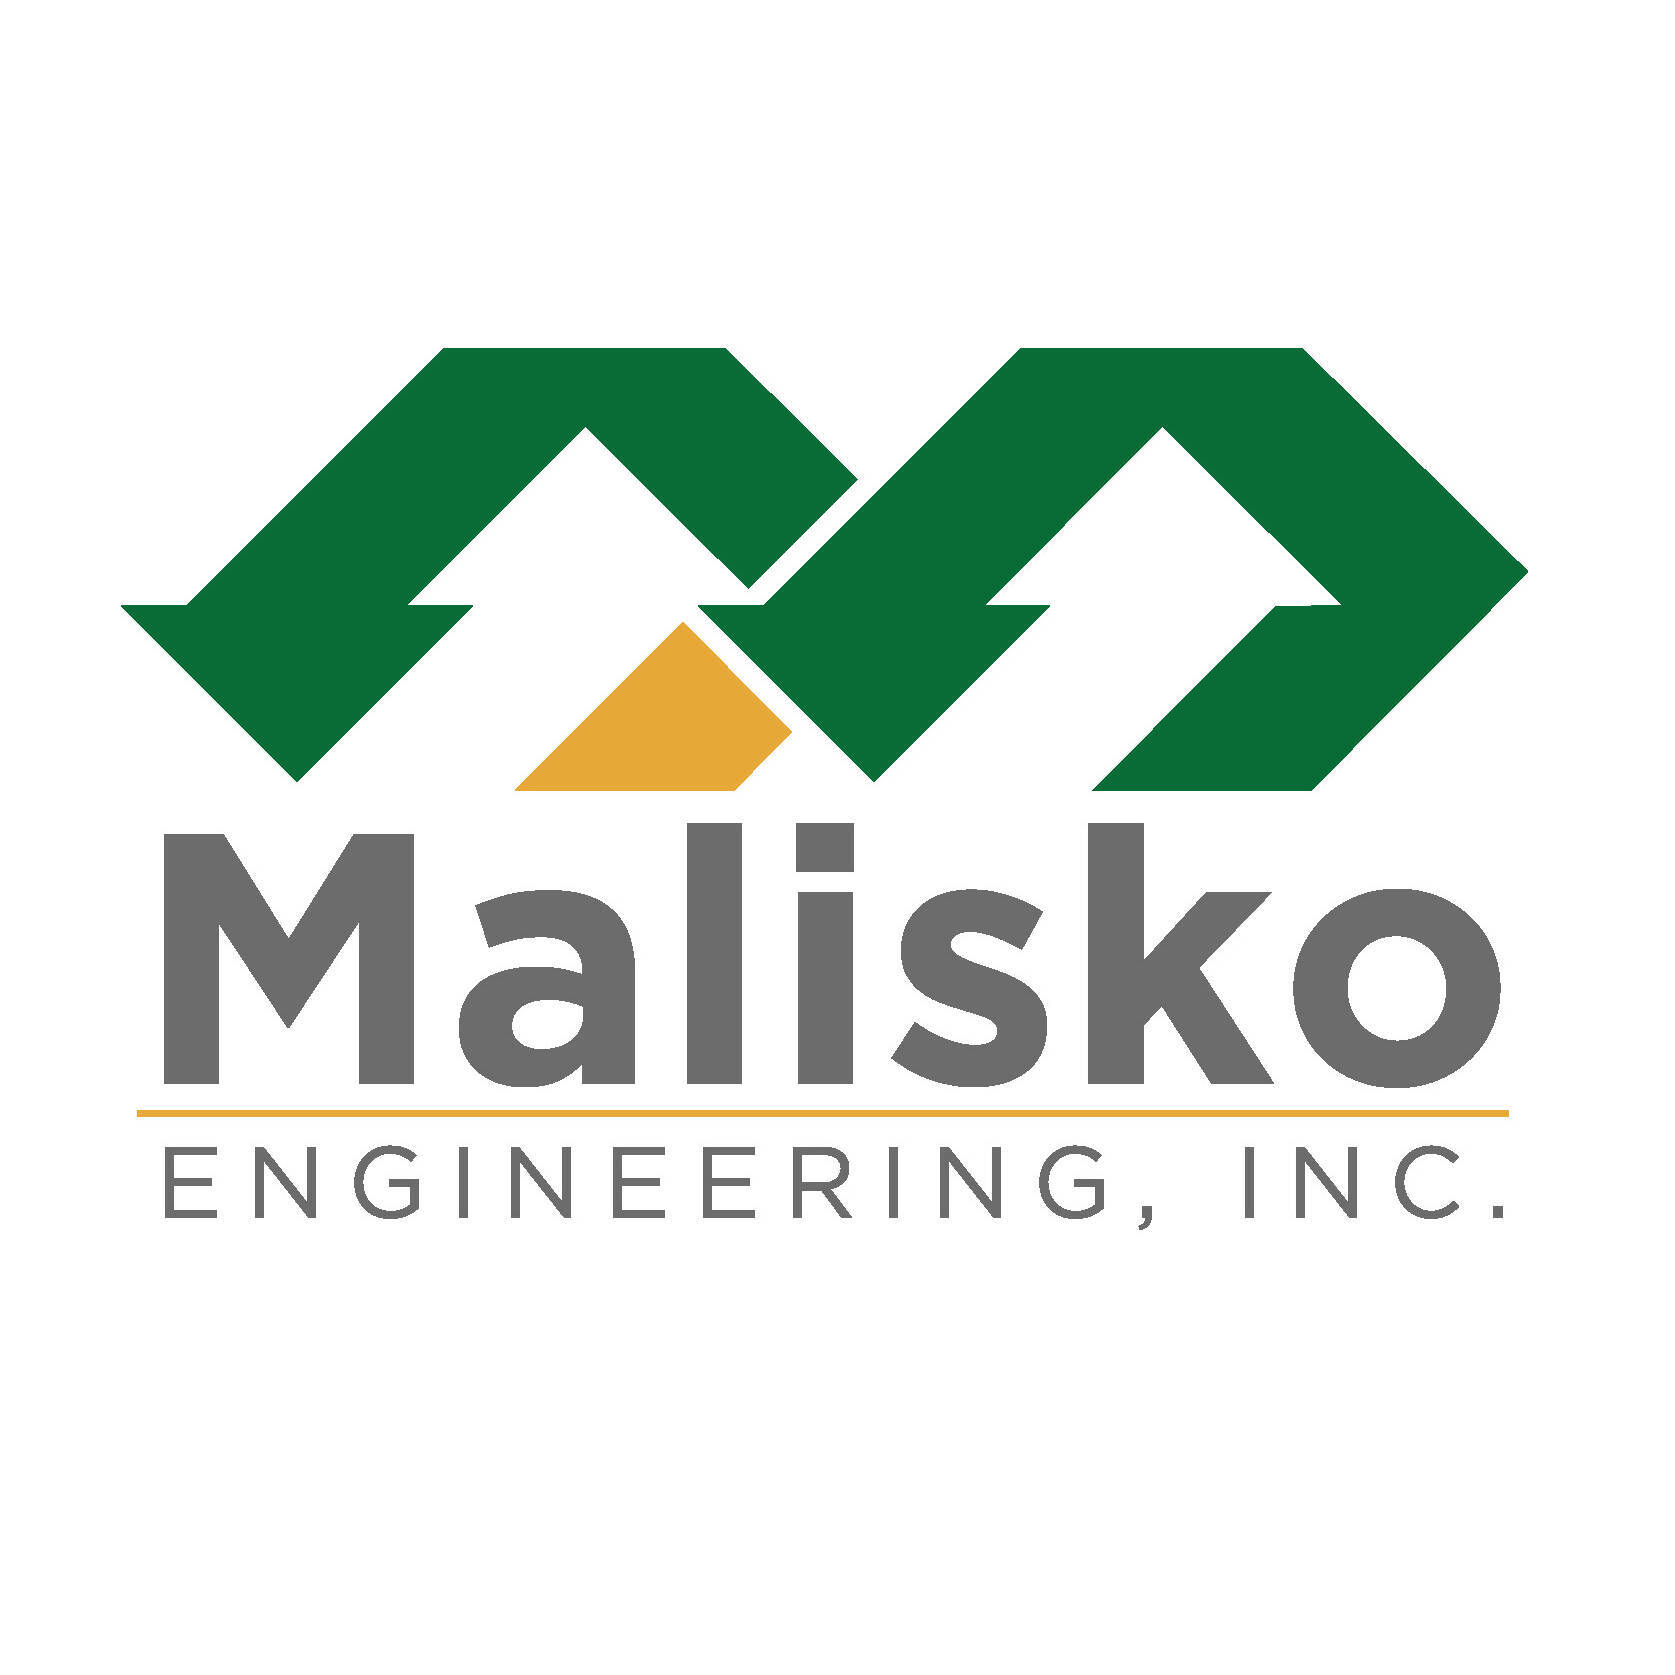 MALISKO ENGINEERING/EAU CLAIRE - INFORMATION TECHNOLOGY SCHOLARSHIP